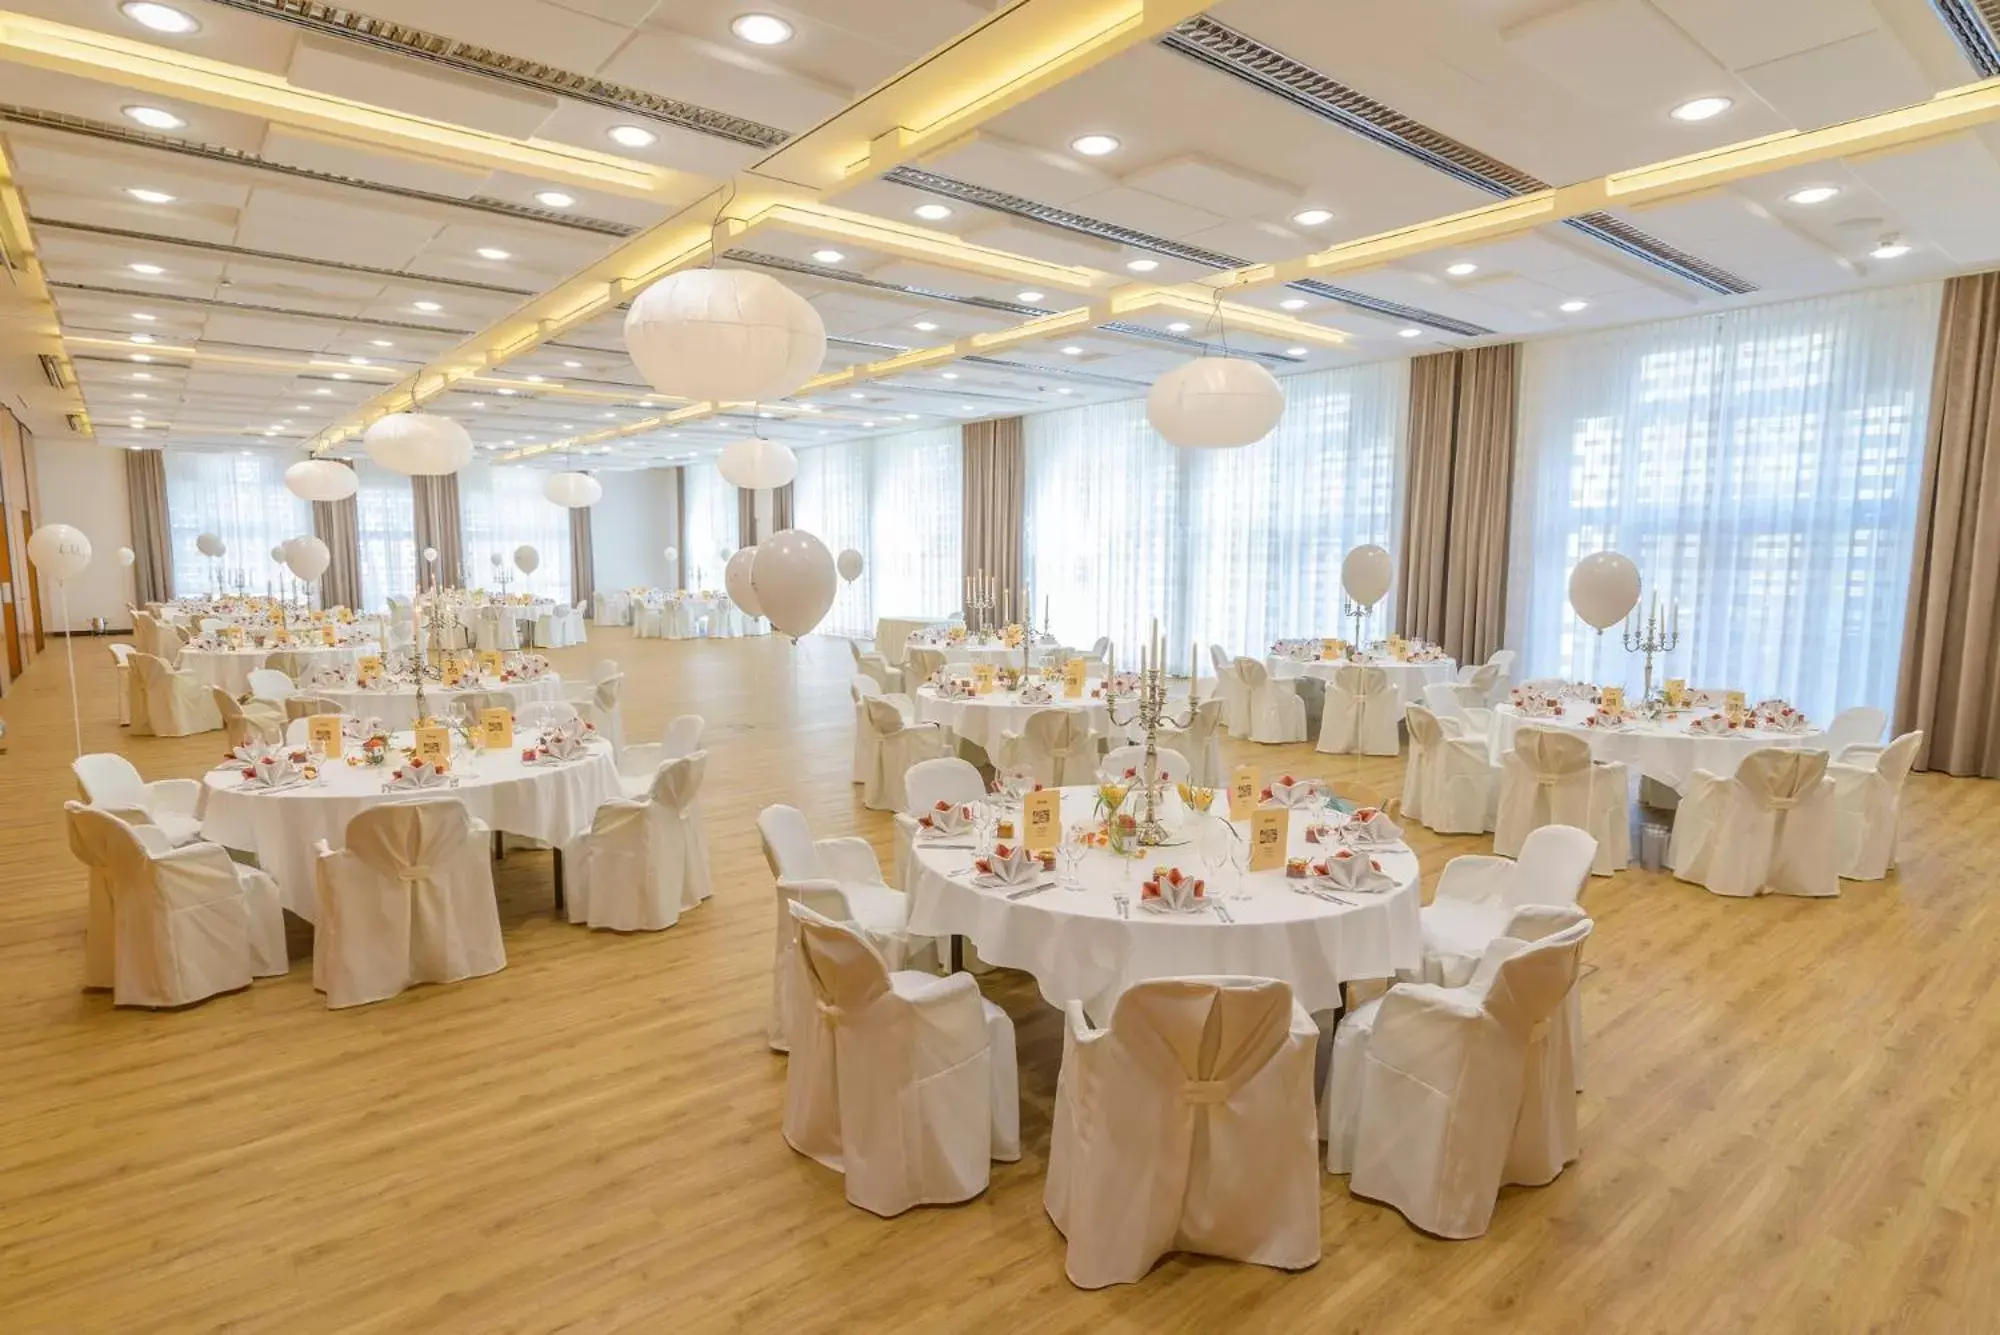 Banquet/Function facilities, Banquet Facilities in Best Western Plus Hotel Am Schlossberg